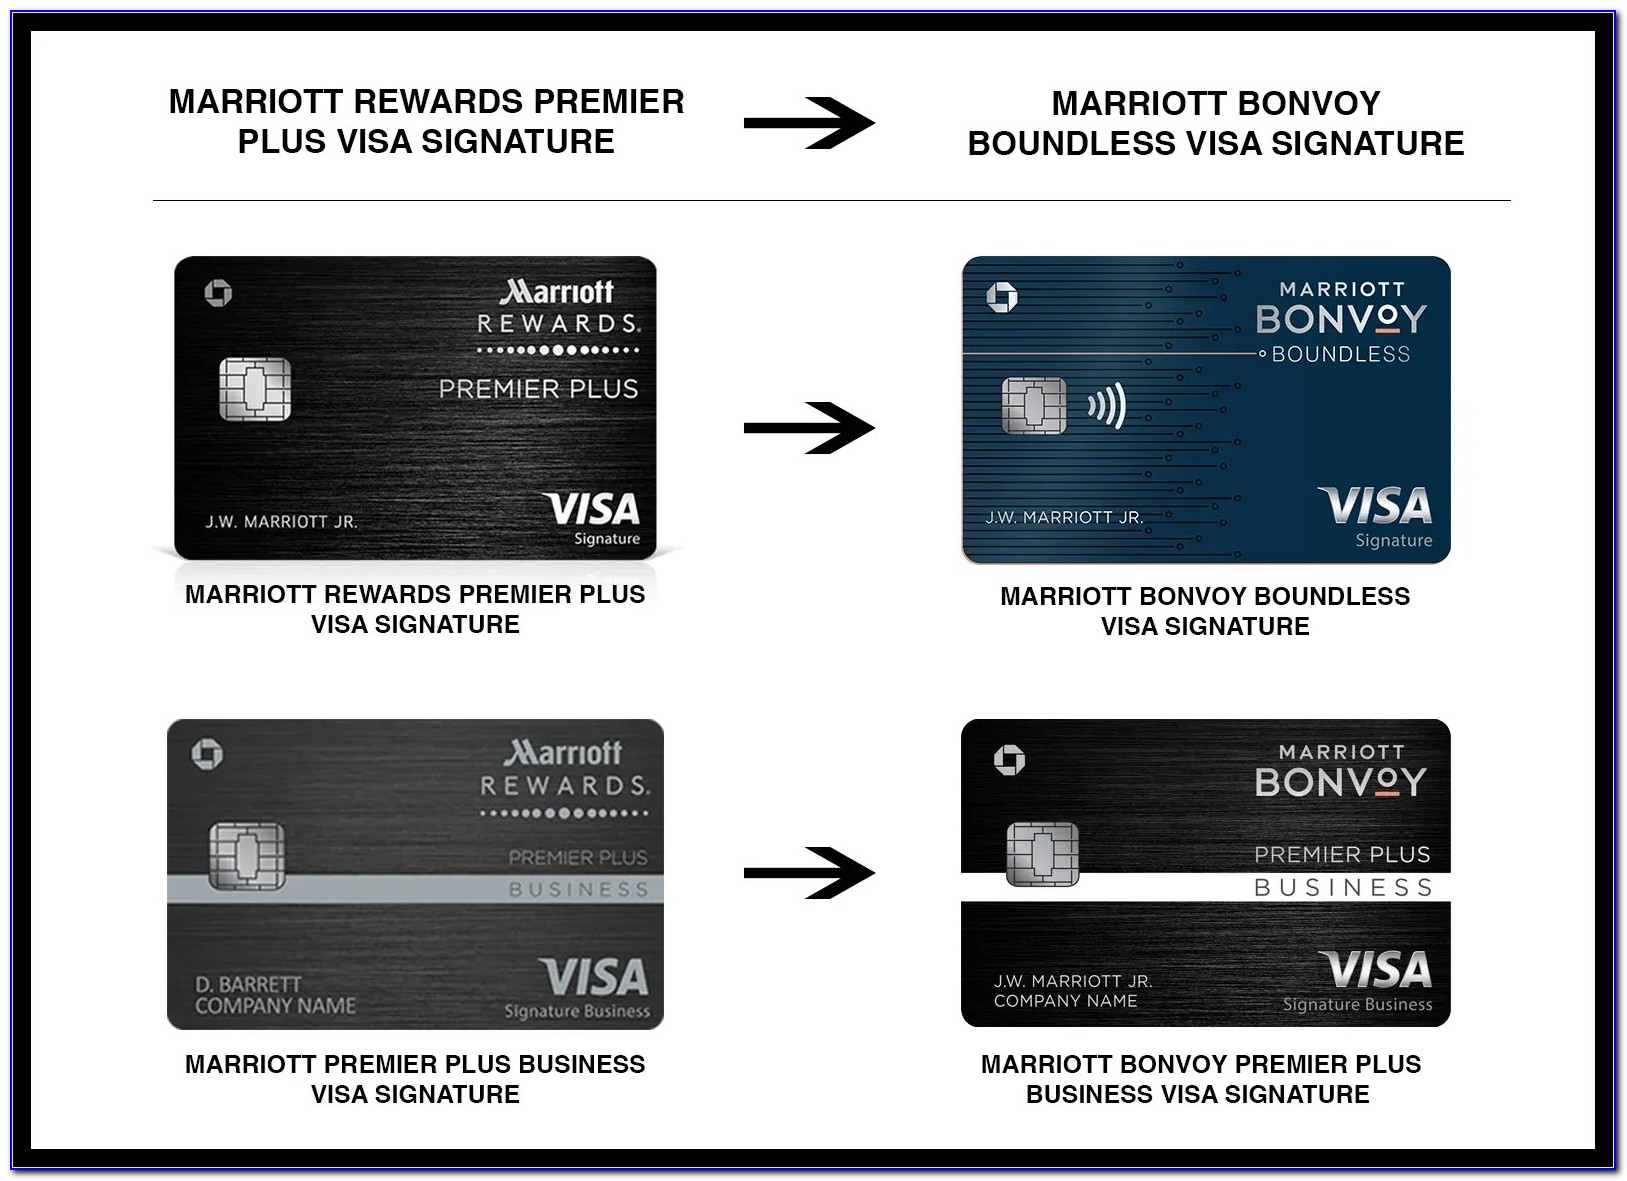 Chase Marriott Rewards Premier Business Credit Card